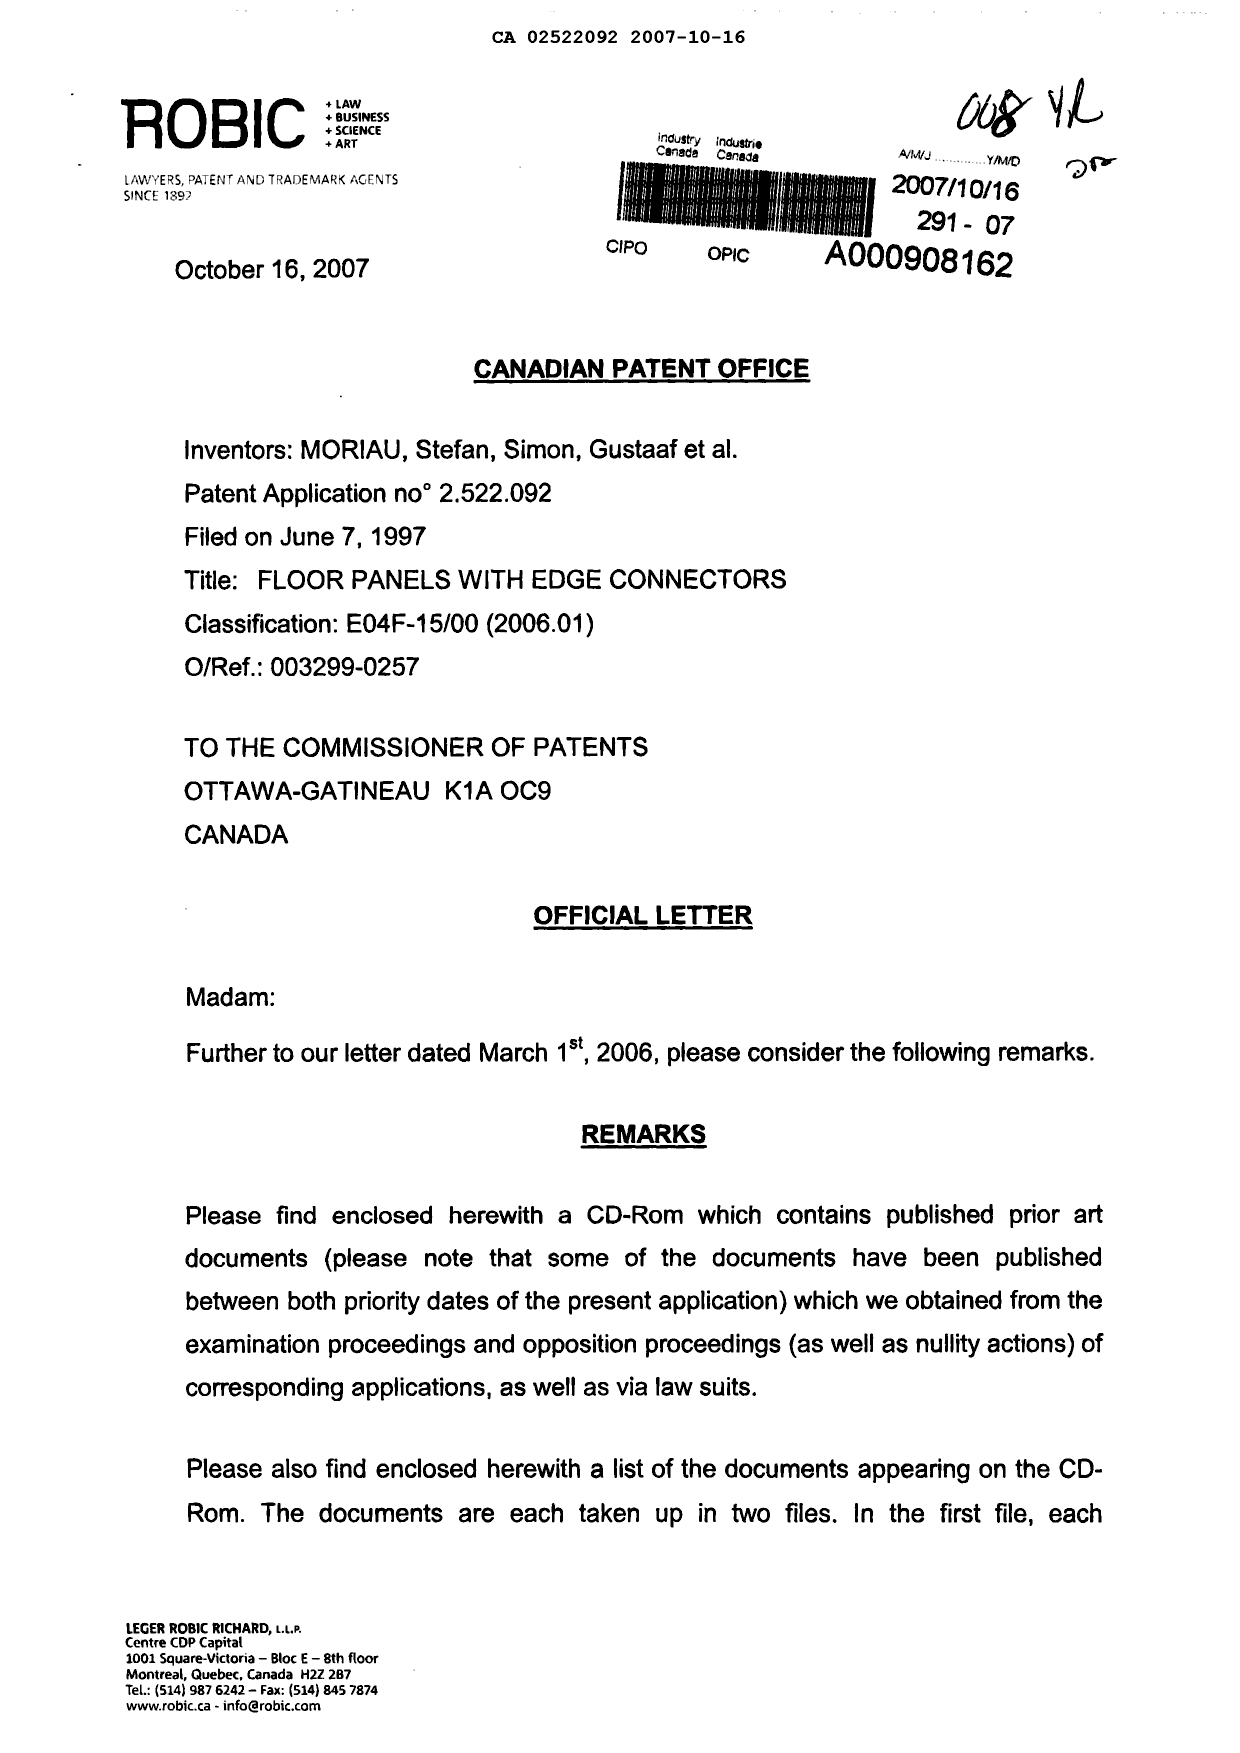 Canadian Patent Document 2522092. Prosecution-Amendment 20061216. Image 1 of 2